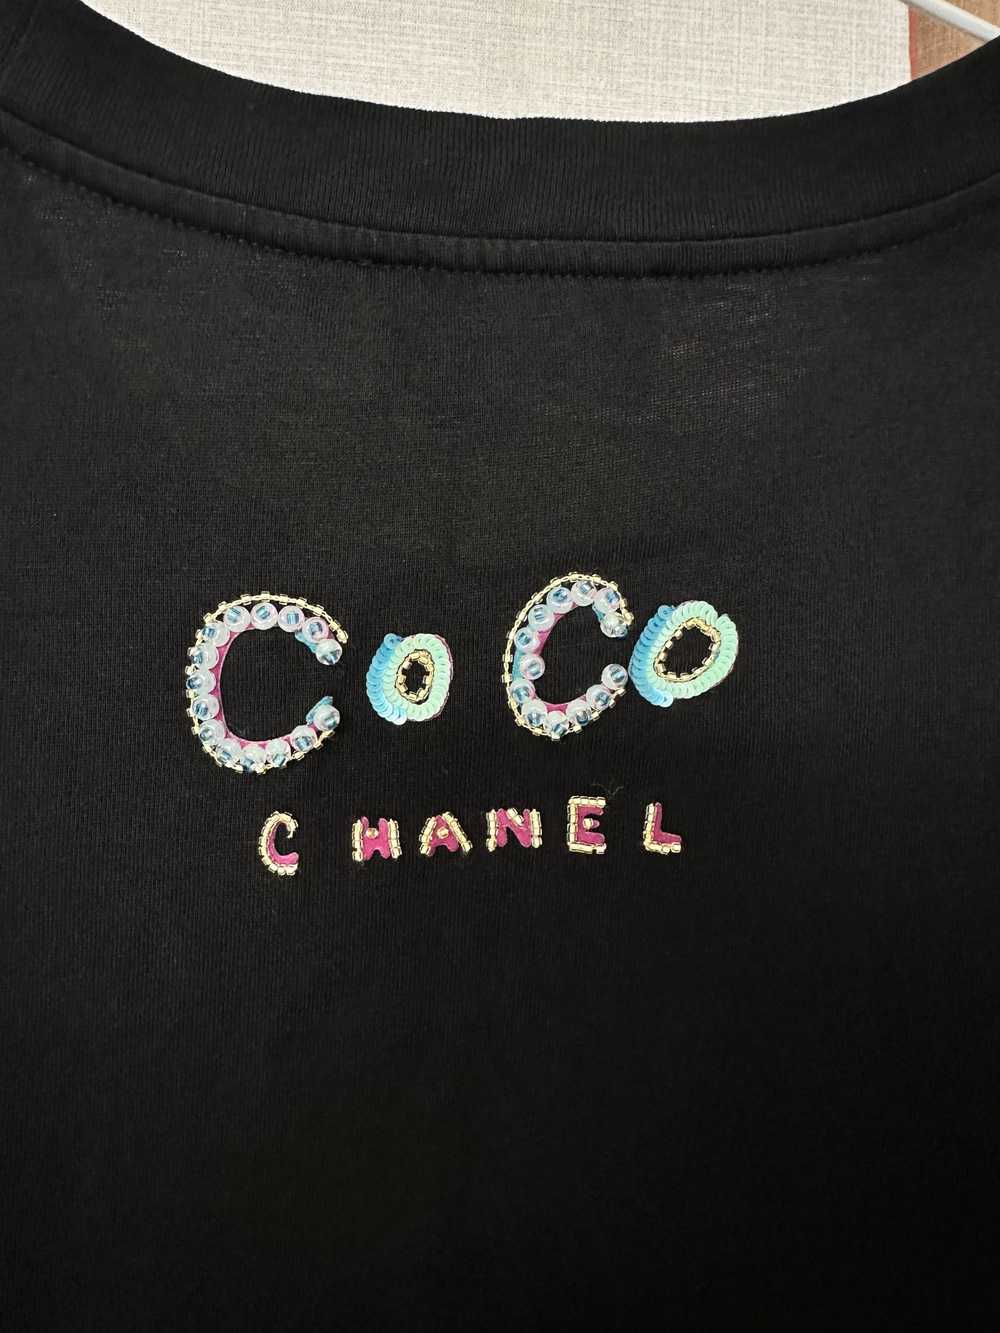 Chanel Chanel x Pharrell Coco Chanel Logo T-Shirt - image 7